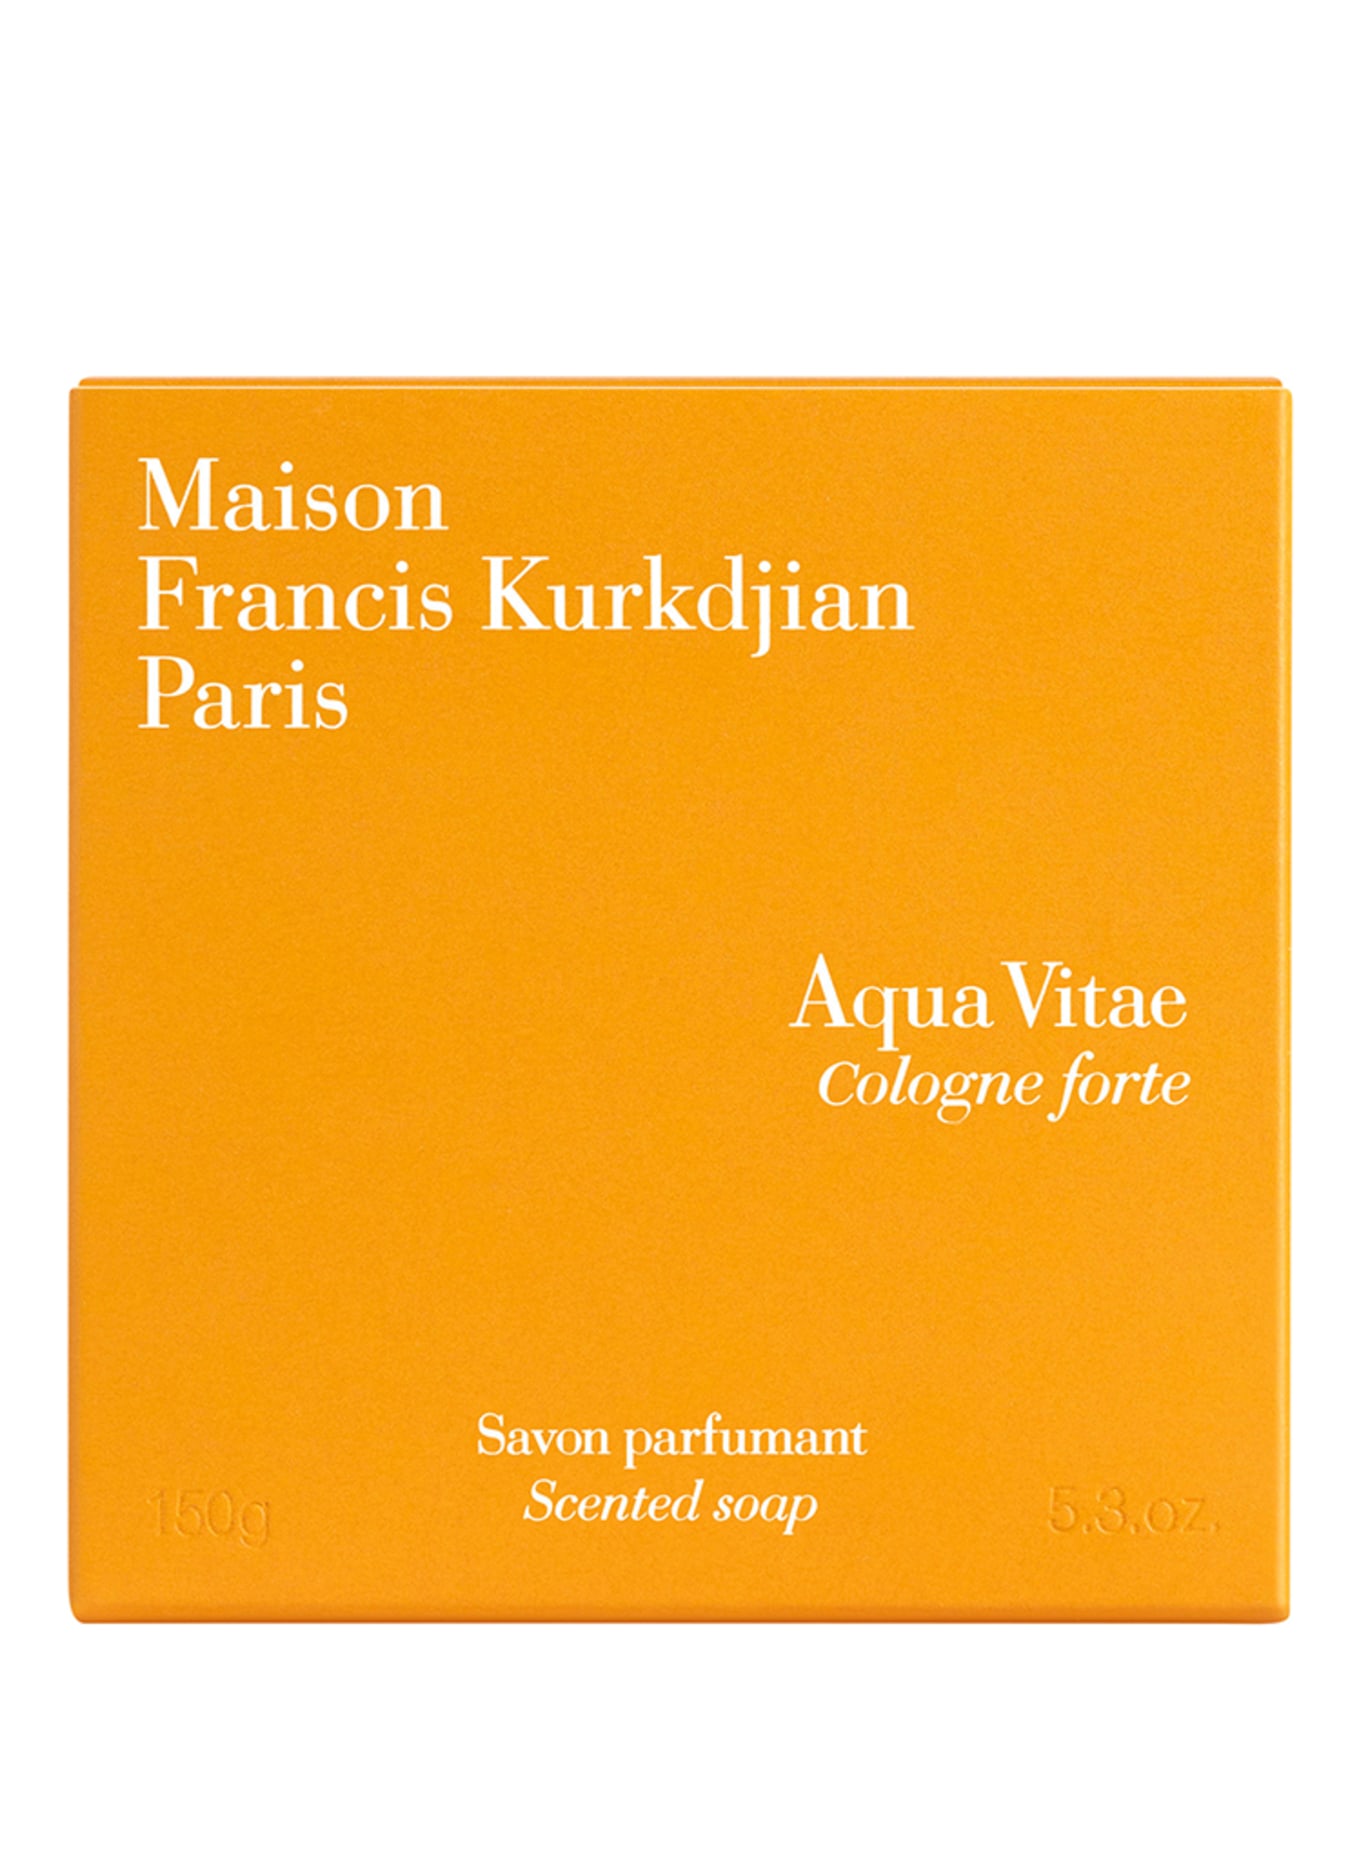 Maison Francis Kurkdjian Paris AQUA VITAE COLOGNE FORTE (Obrázek 2)